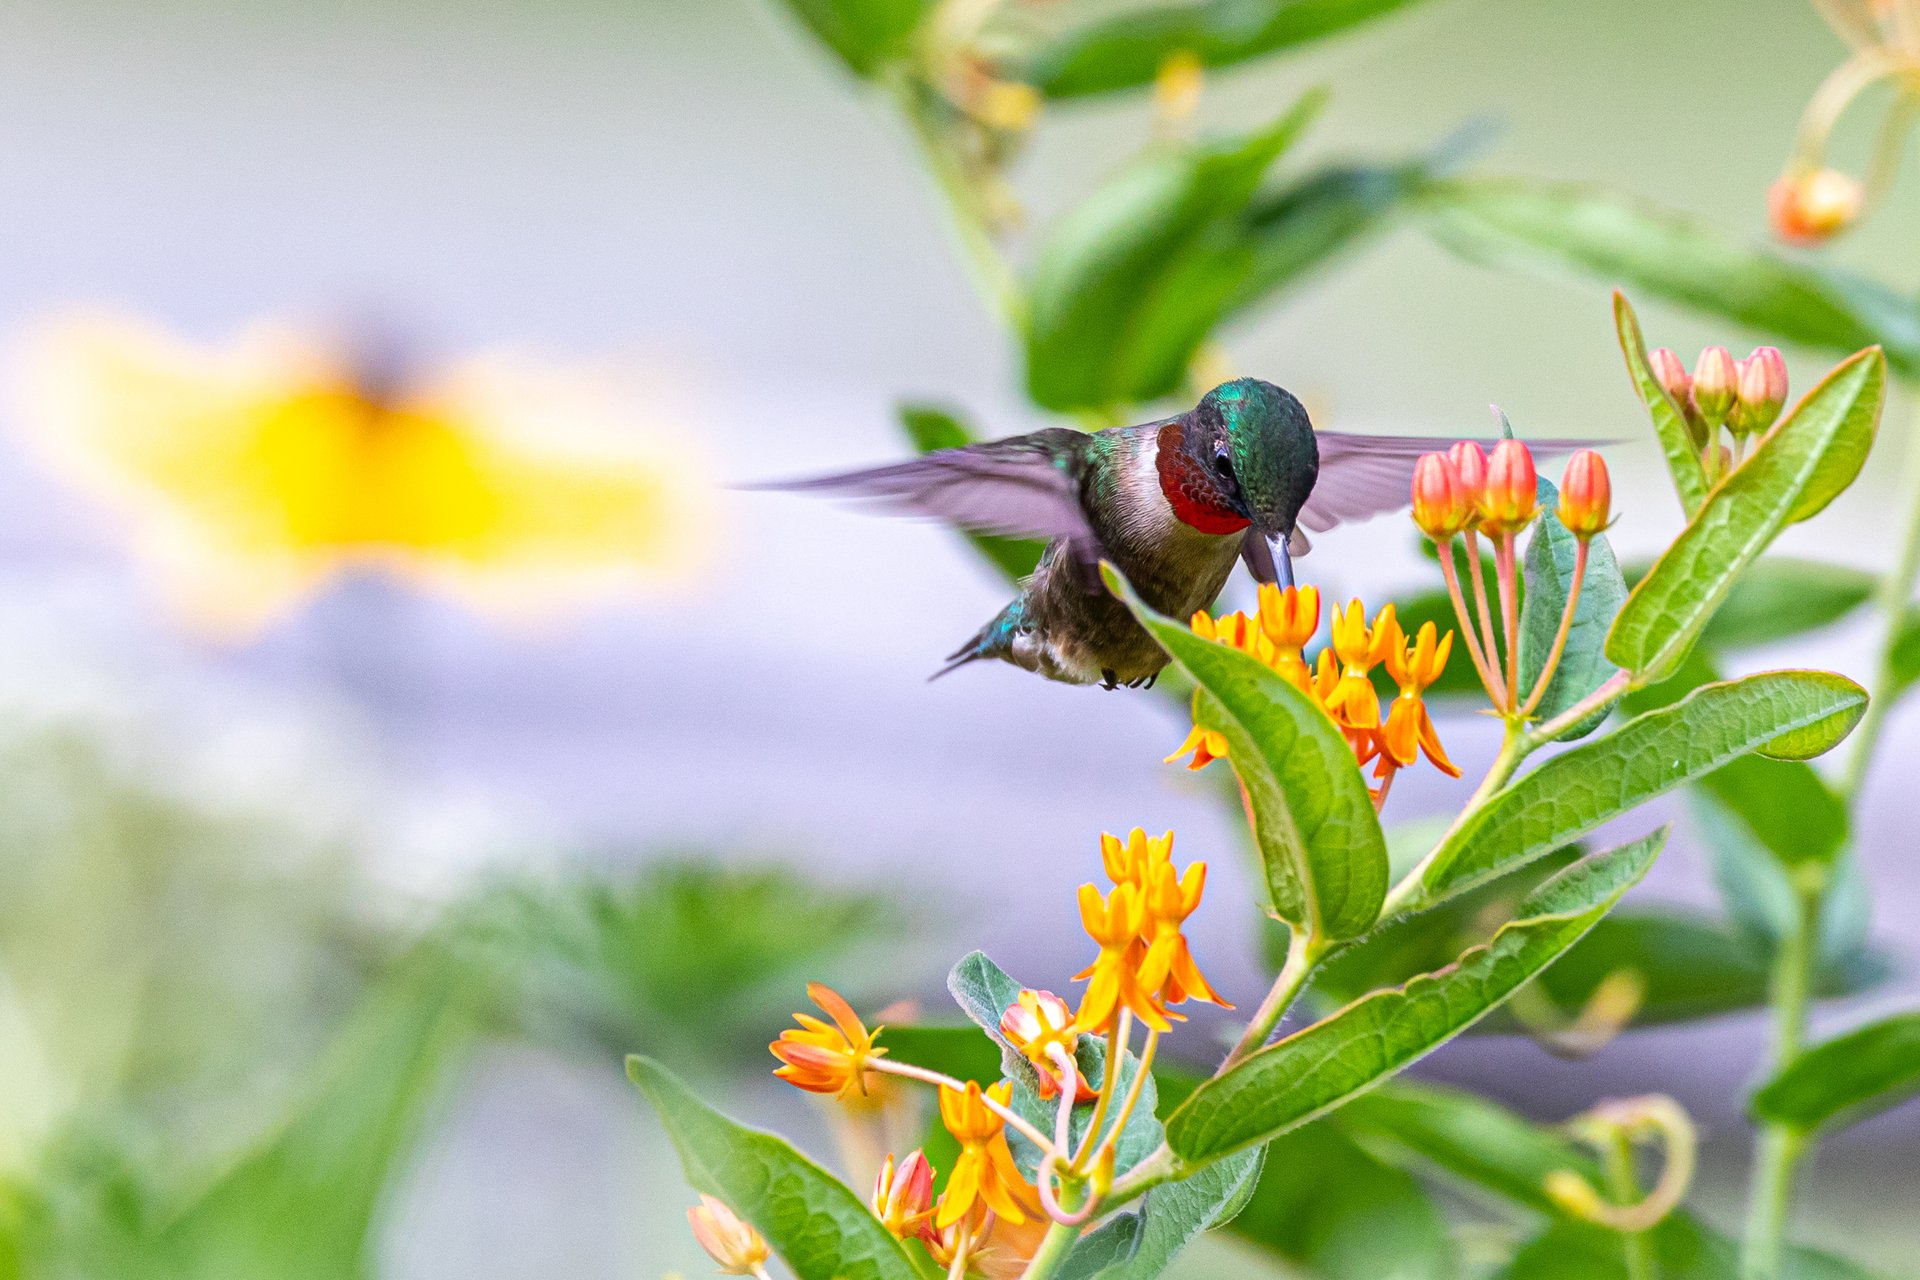 Ruby-throated Hummingbird on plant